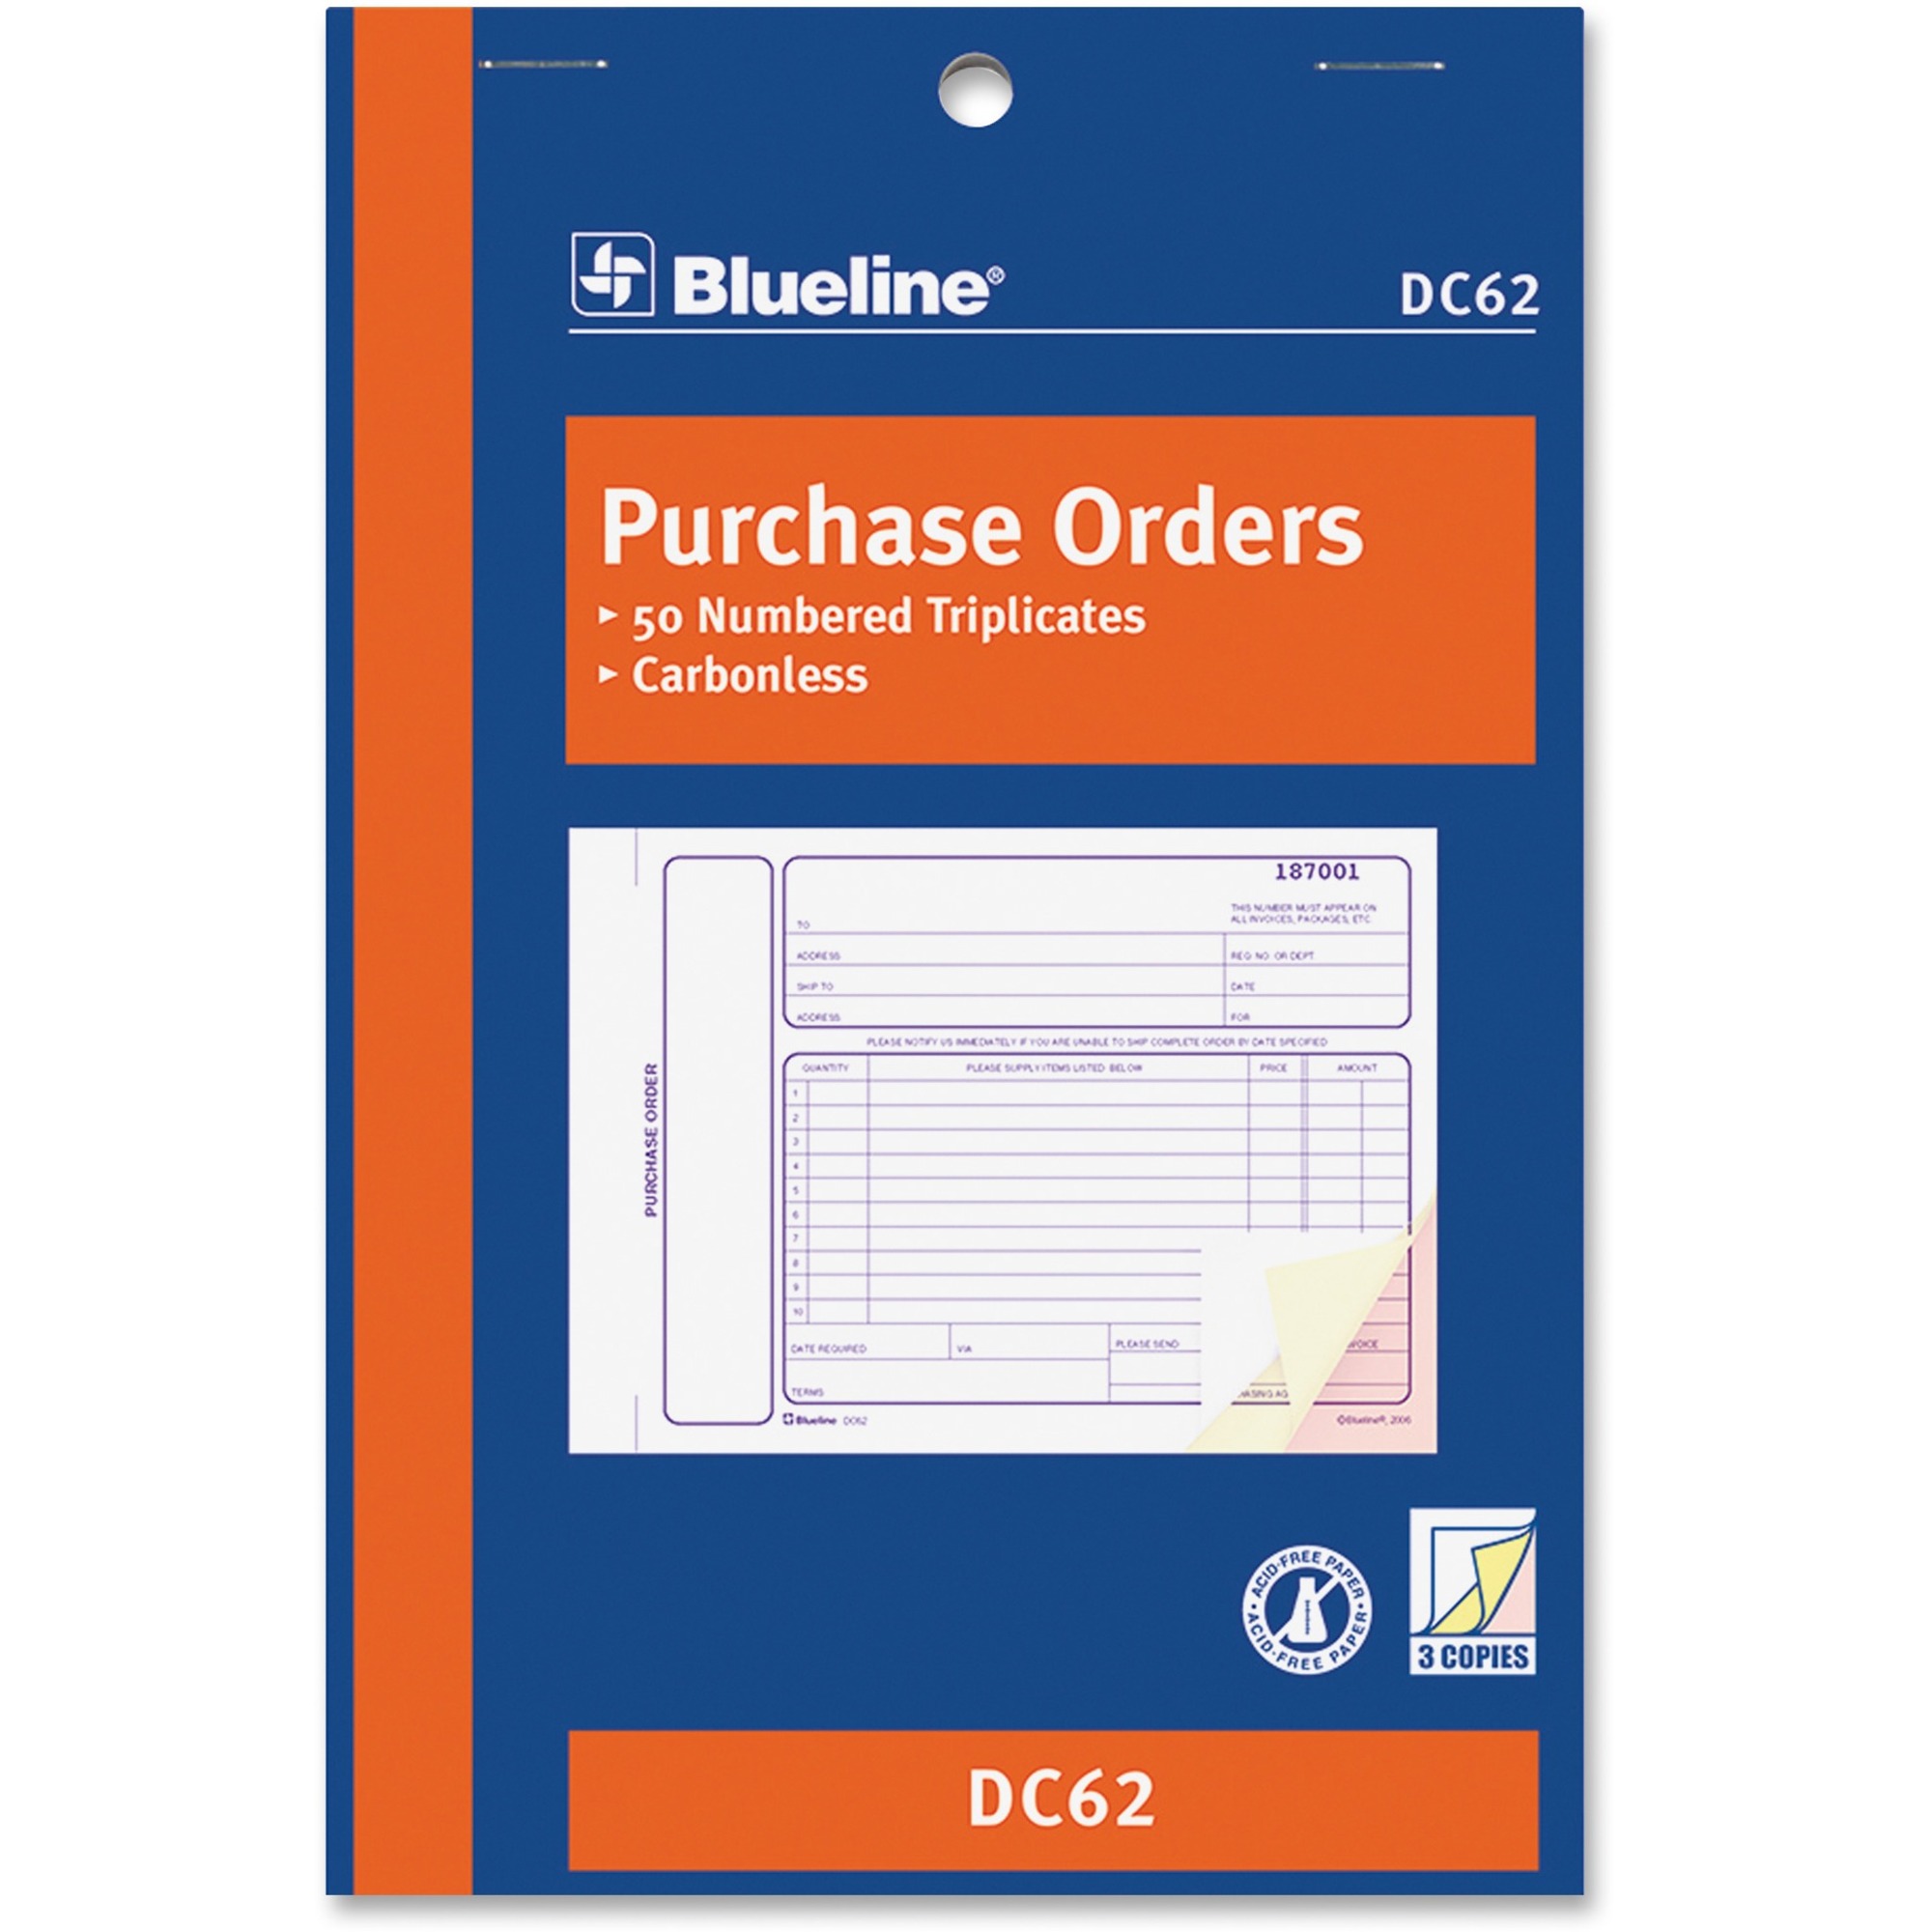 Blueline Purchase Order Form Book - 50 Sheet(s) - 3 Part Carbonless Copy - 1 Each